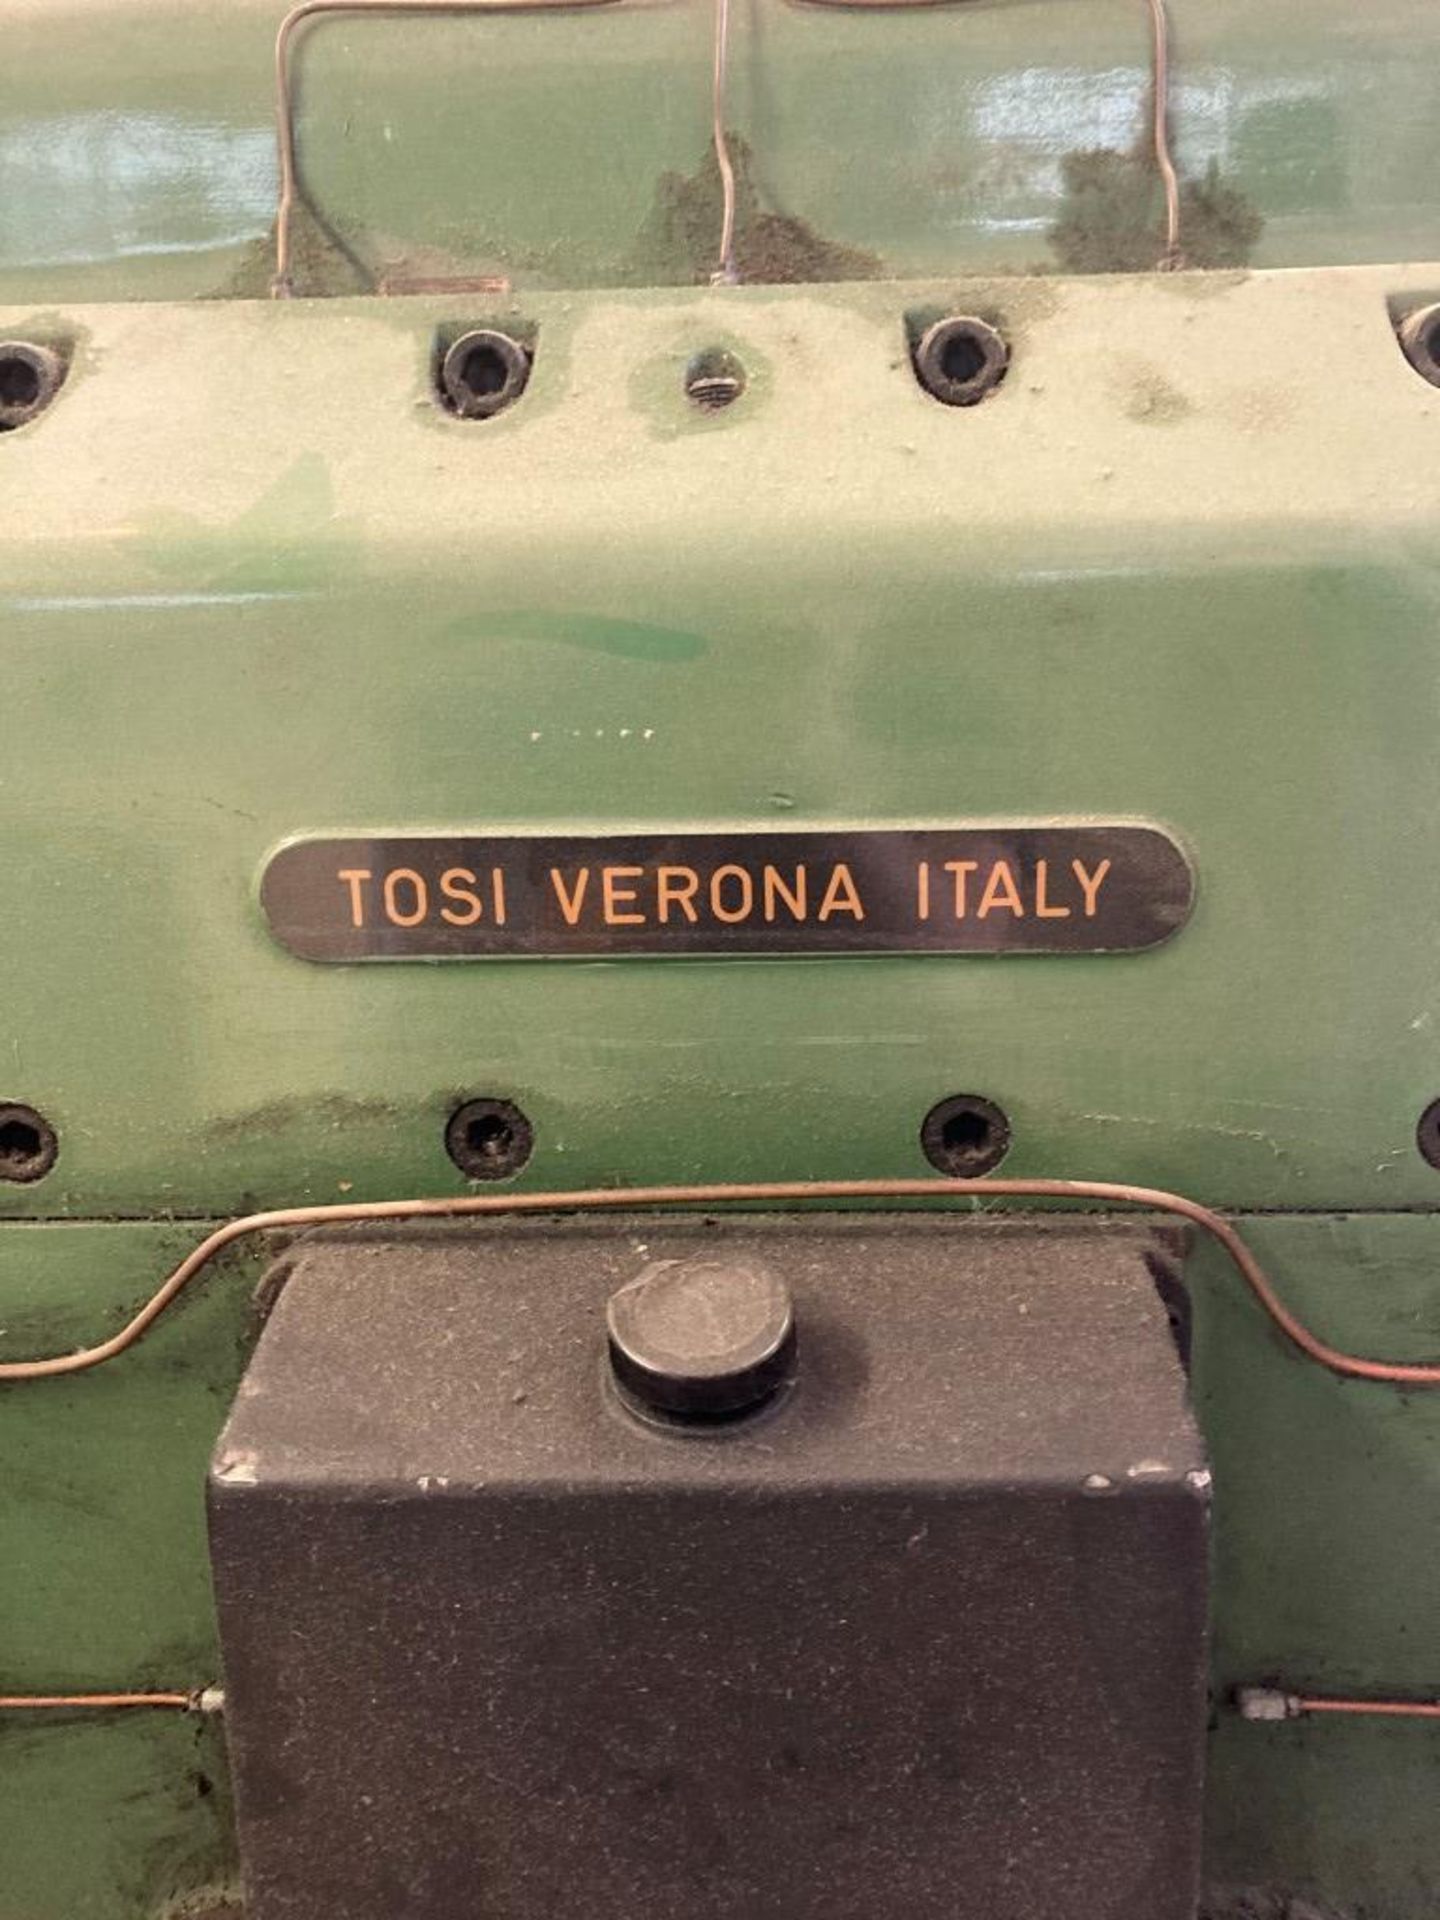 Tosi Verona Italy hydraulic cutting & creasing platten press - Image 8 of 8